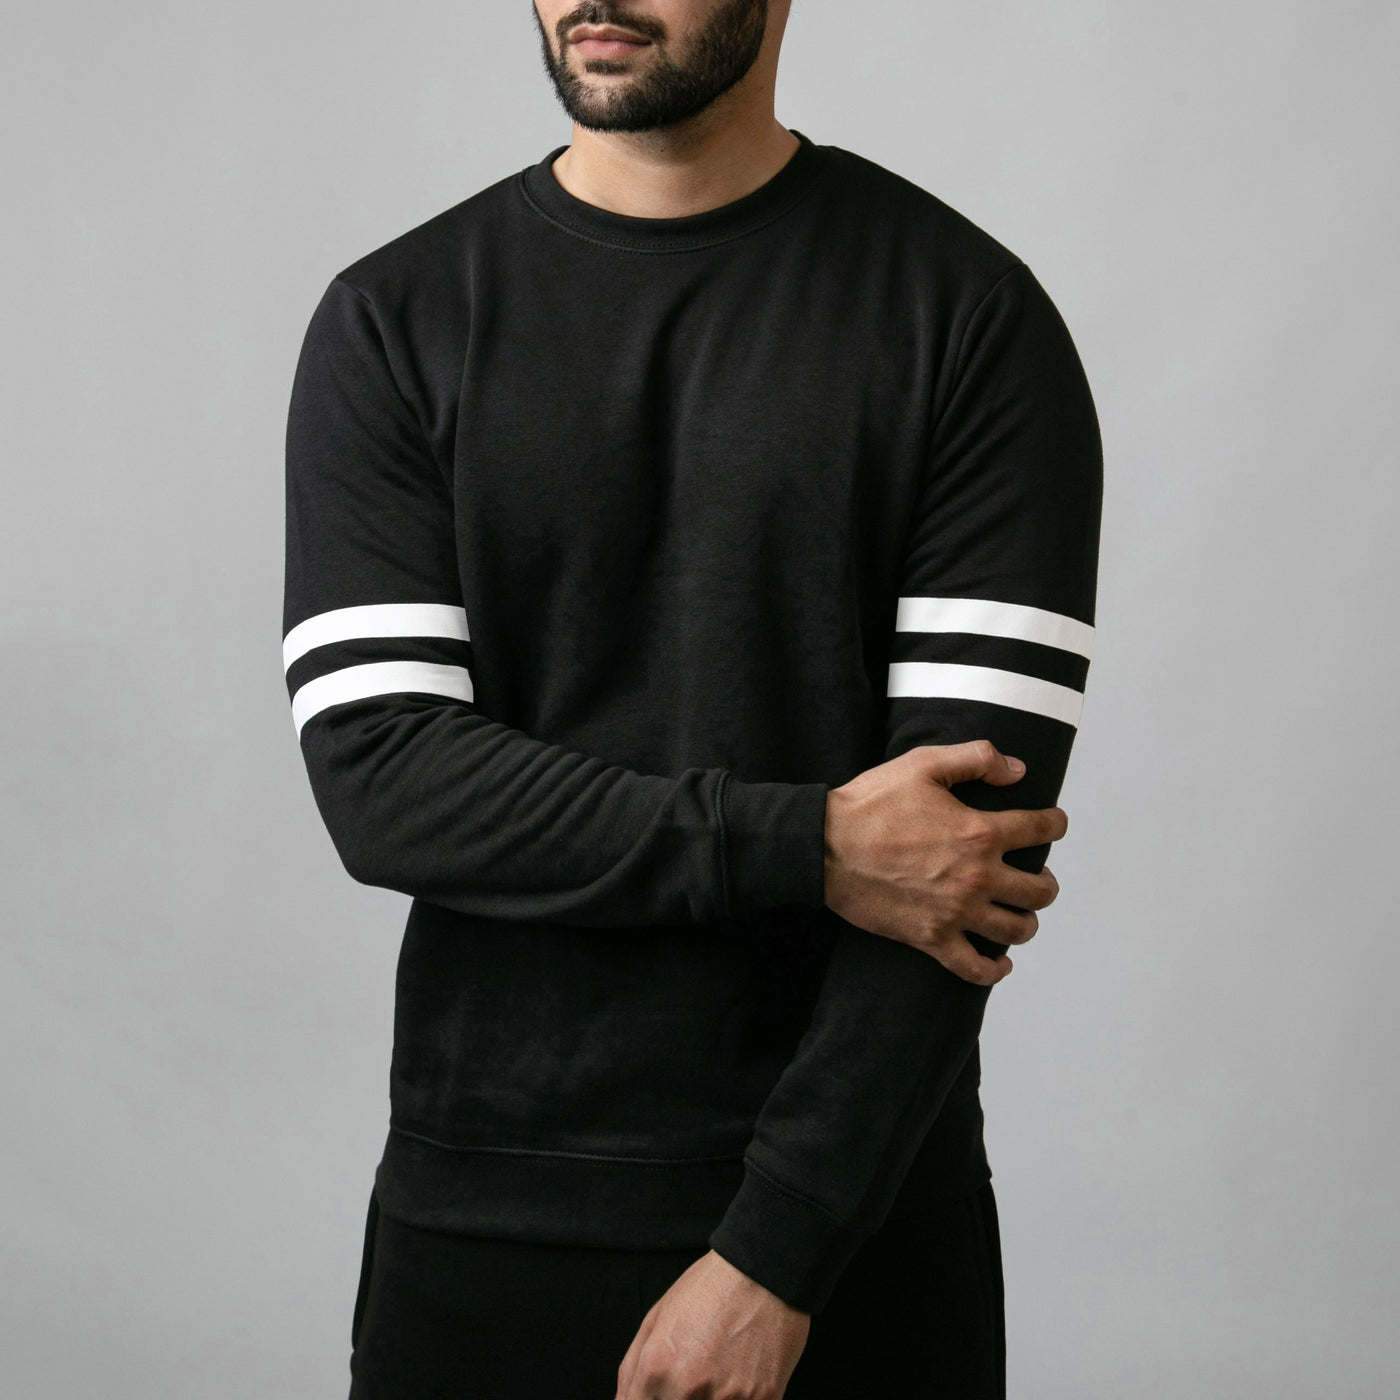 Black Sweatshirt with Printed White Arm Stripes